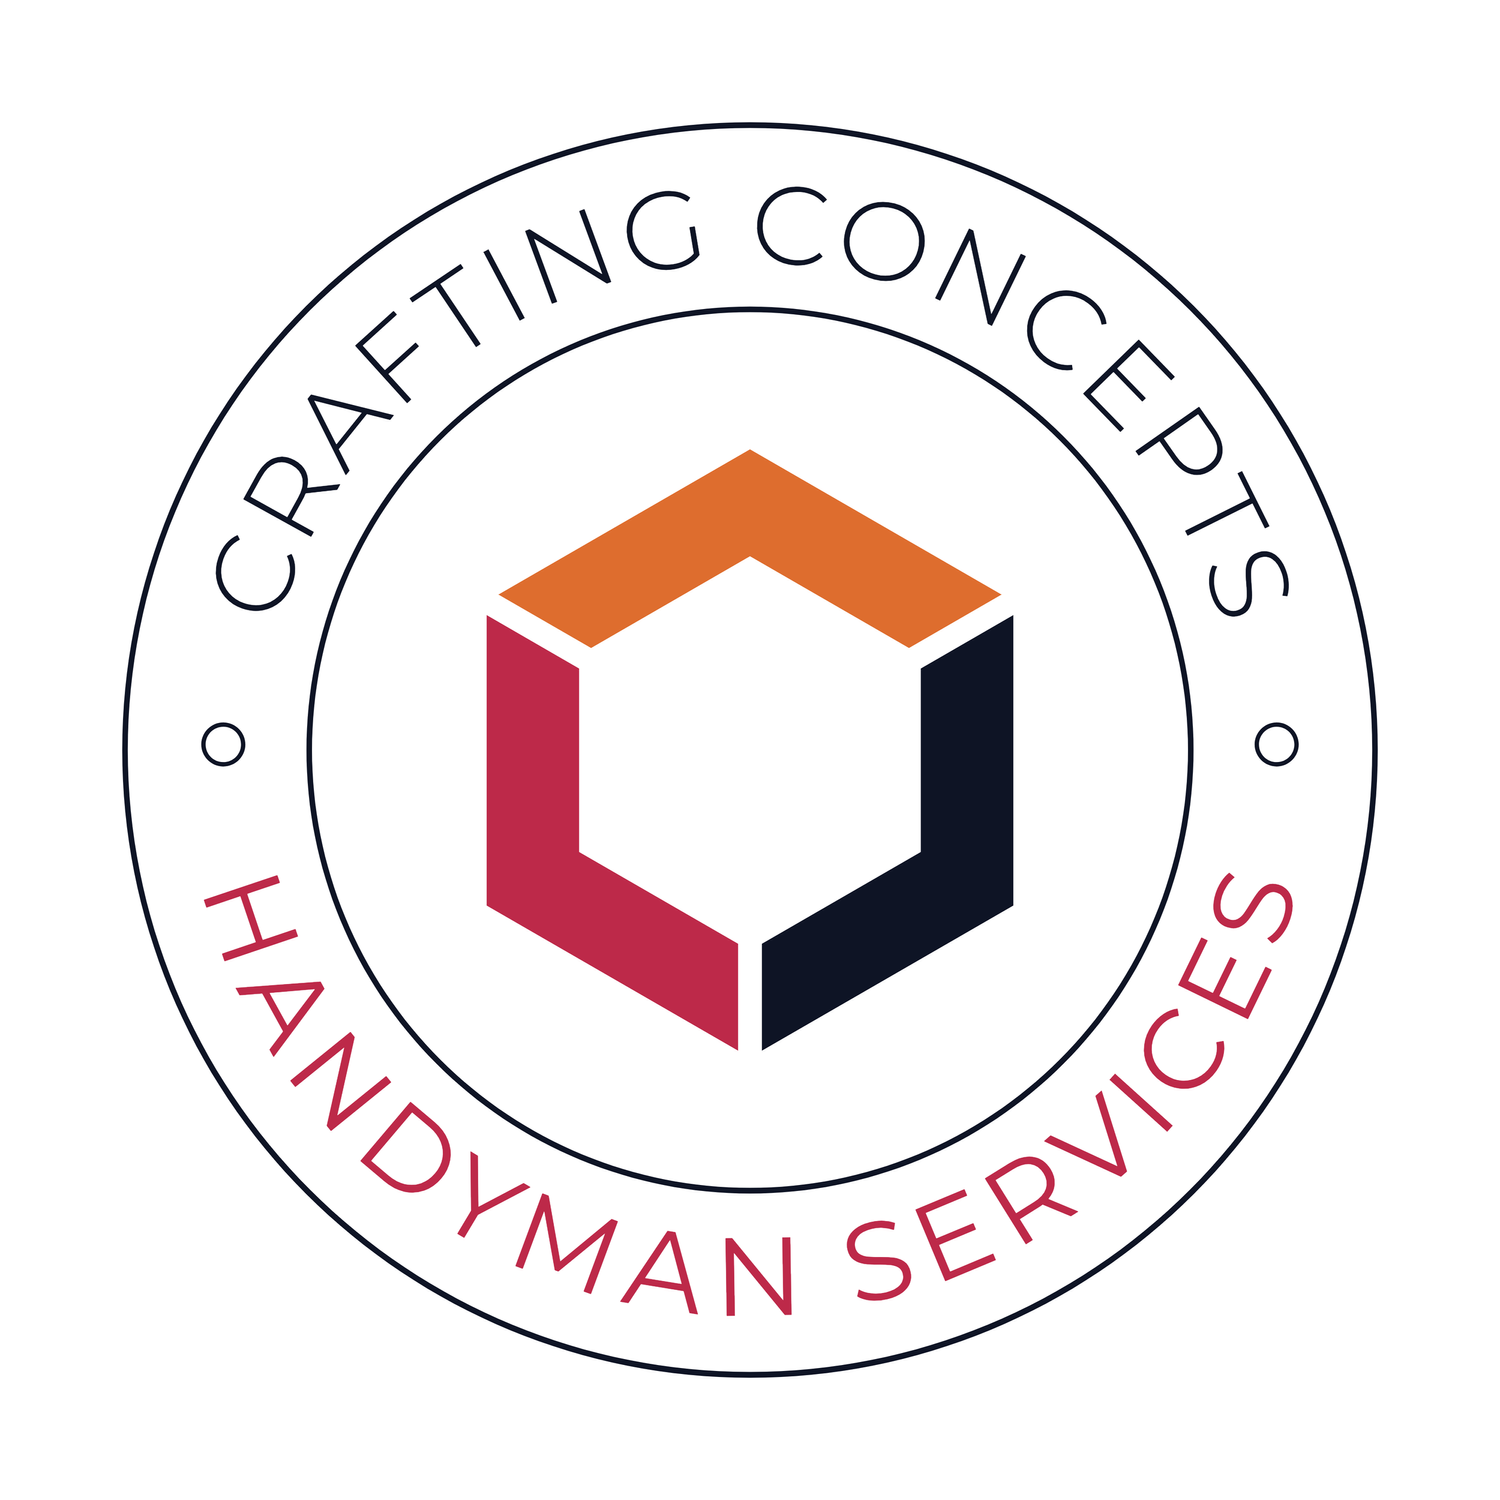 Crafting Concepts Handyman/Contractor | Throop, PA